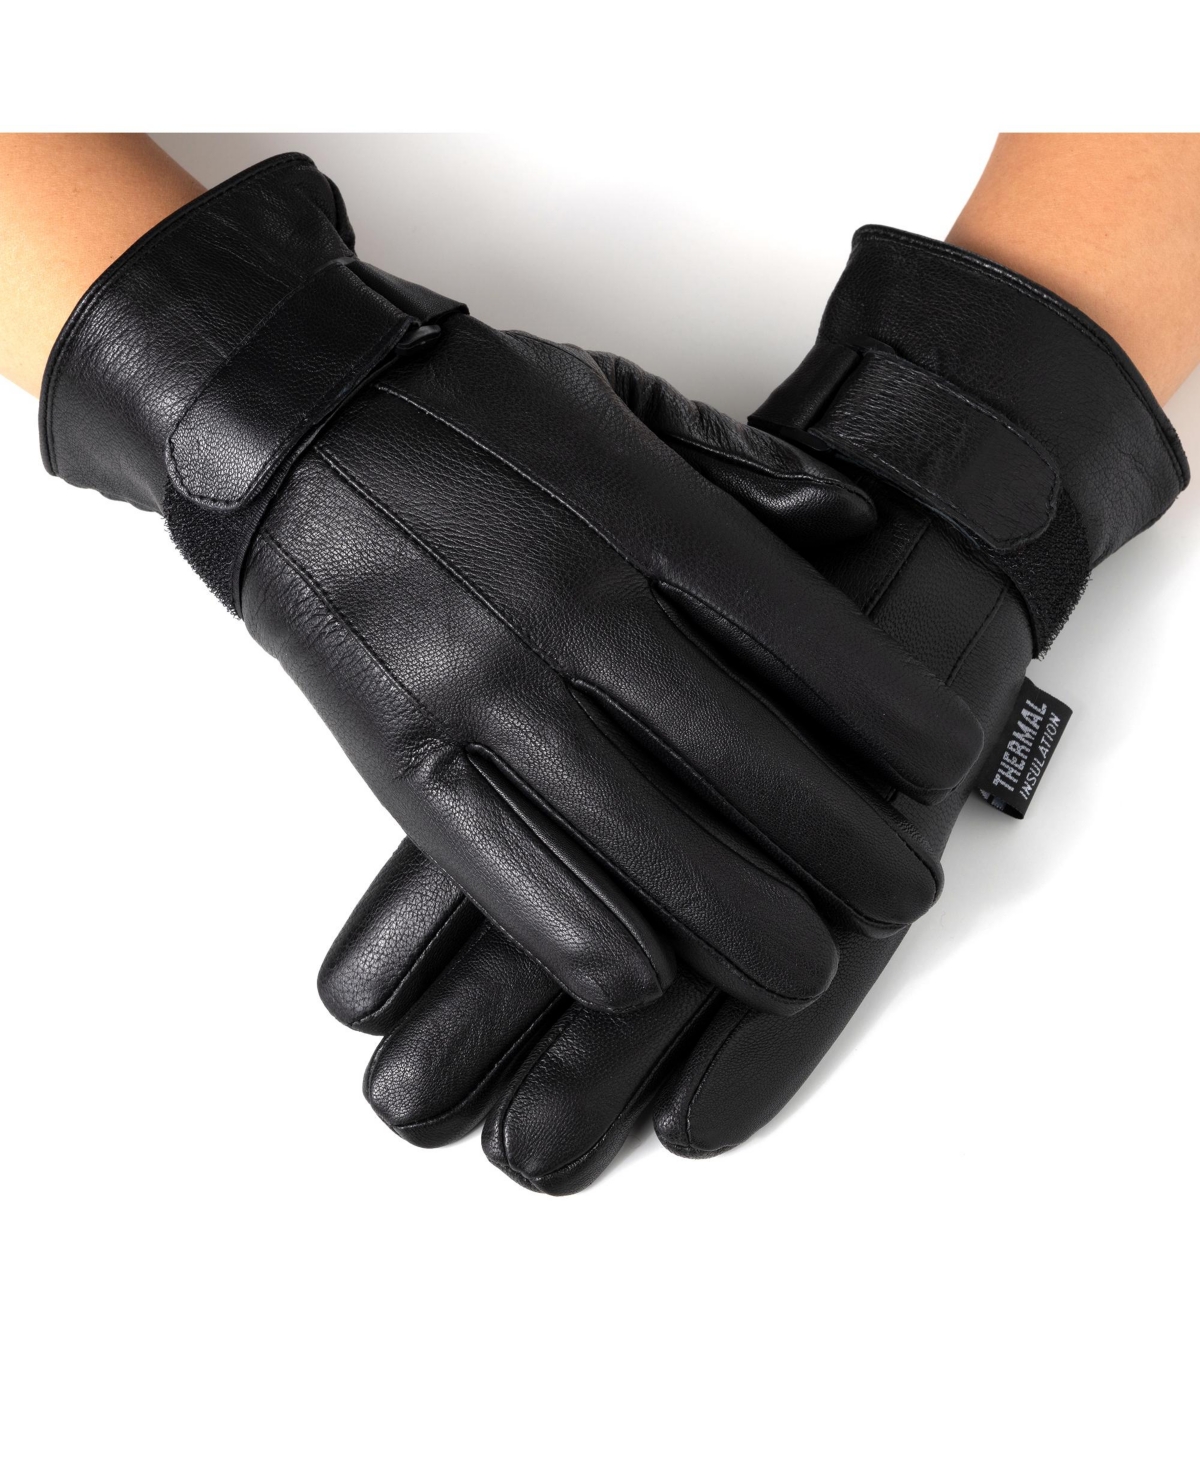 Mens Gloves Dressy Genuine Leather Warm Thermal Lined Wrist Strap - Black